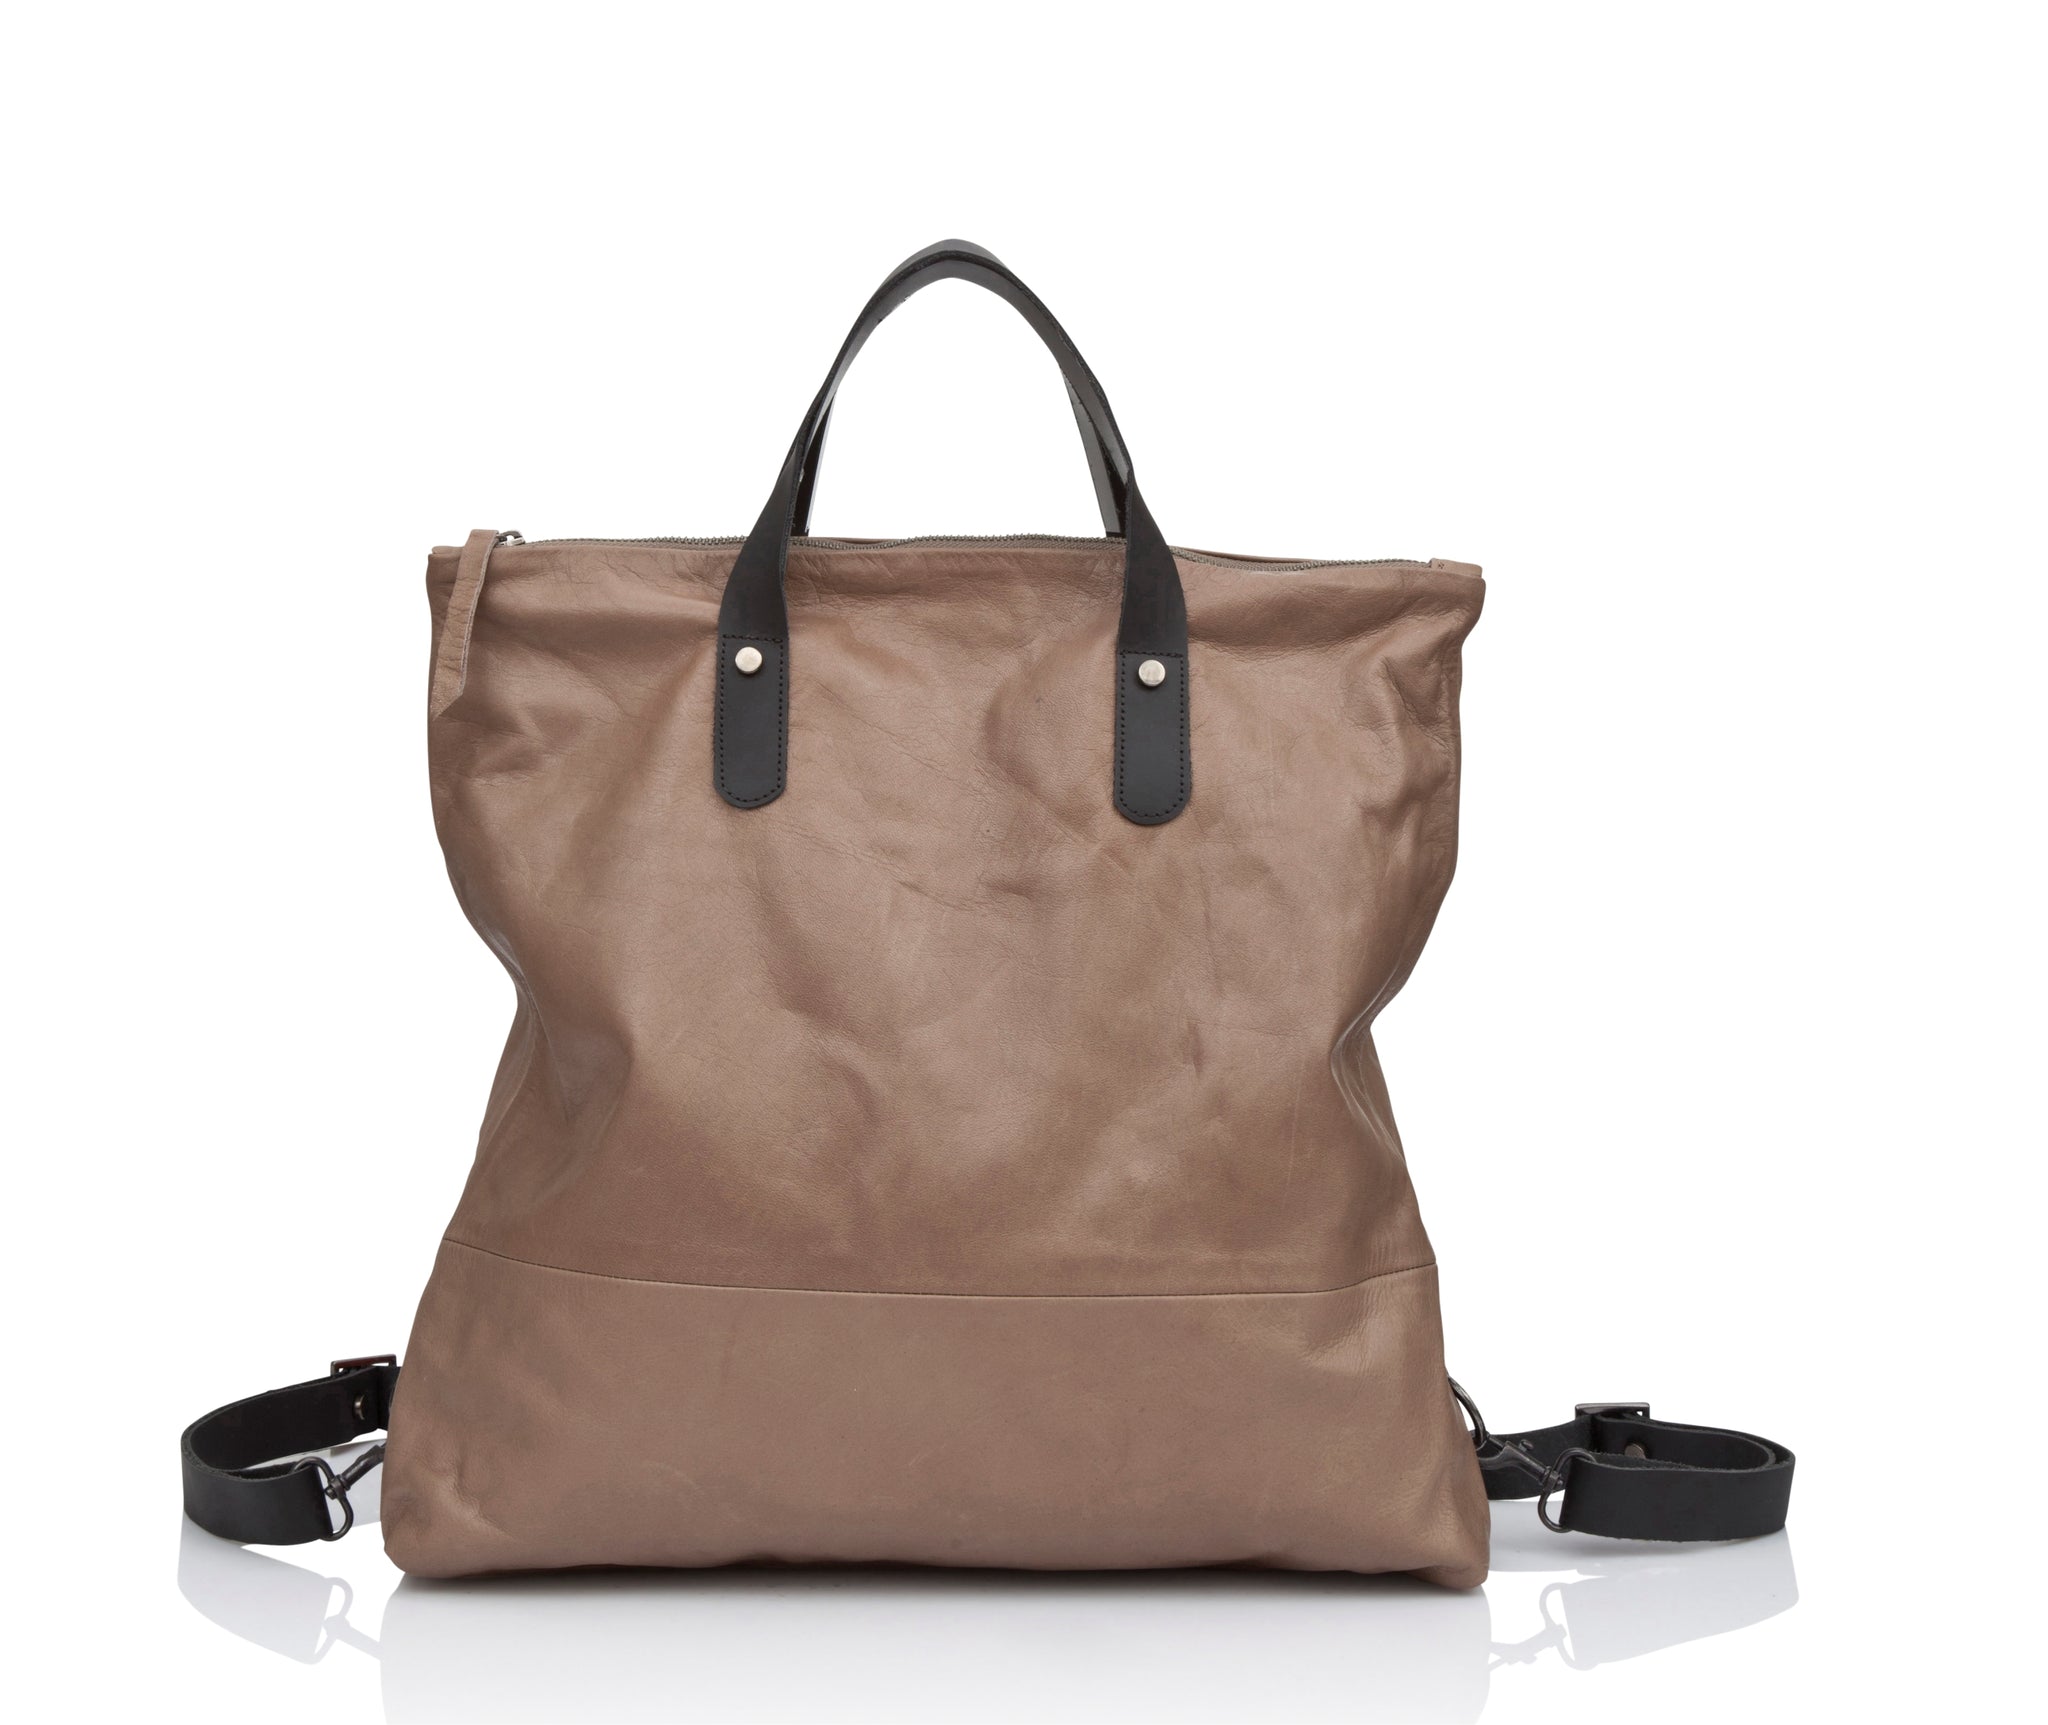 convertible backpack purse Ginkgo - IcaAcs